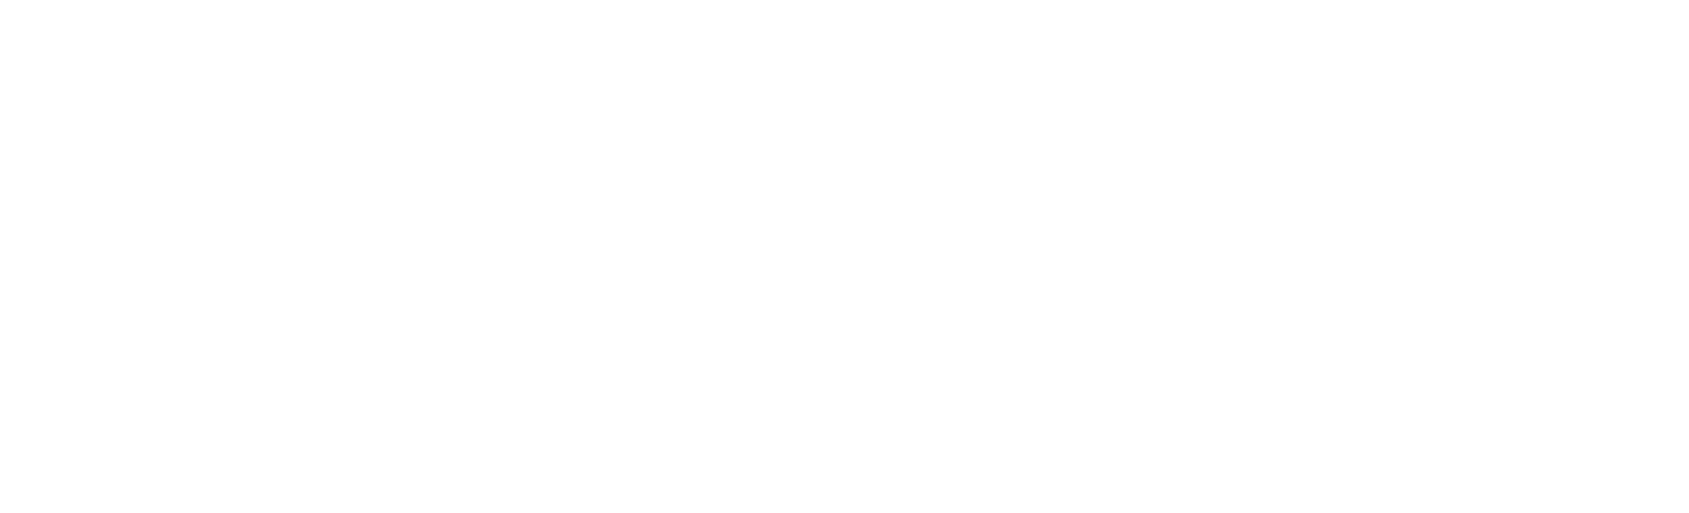 covid-19_logo_reverse.png